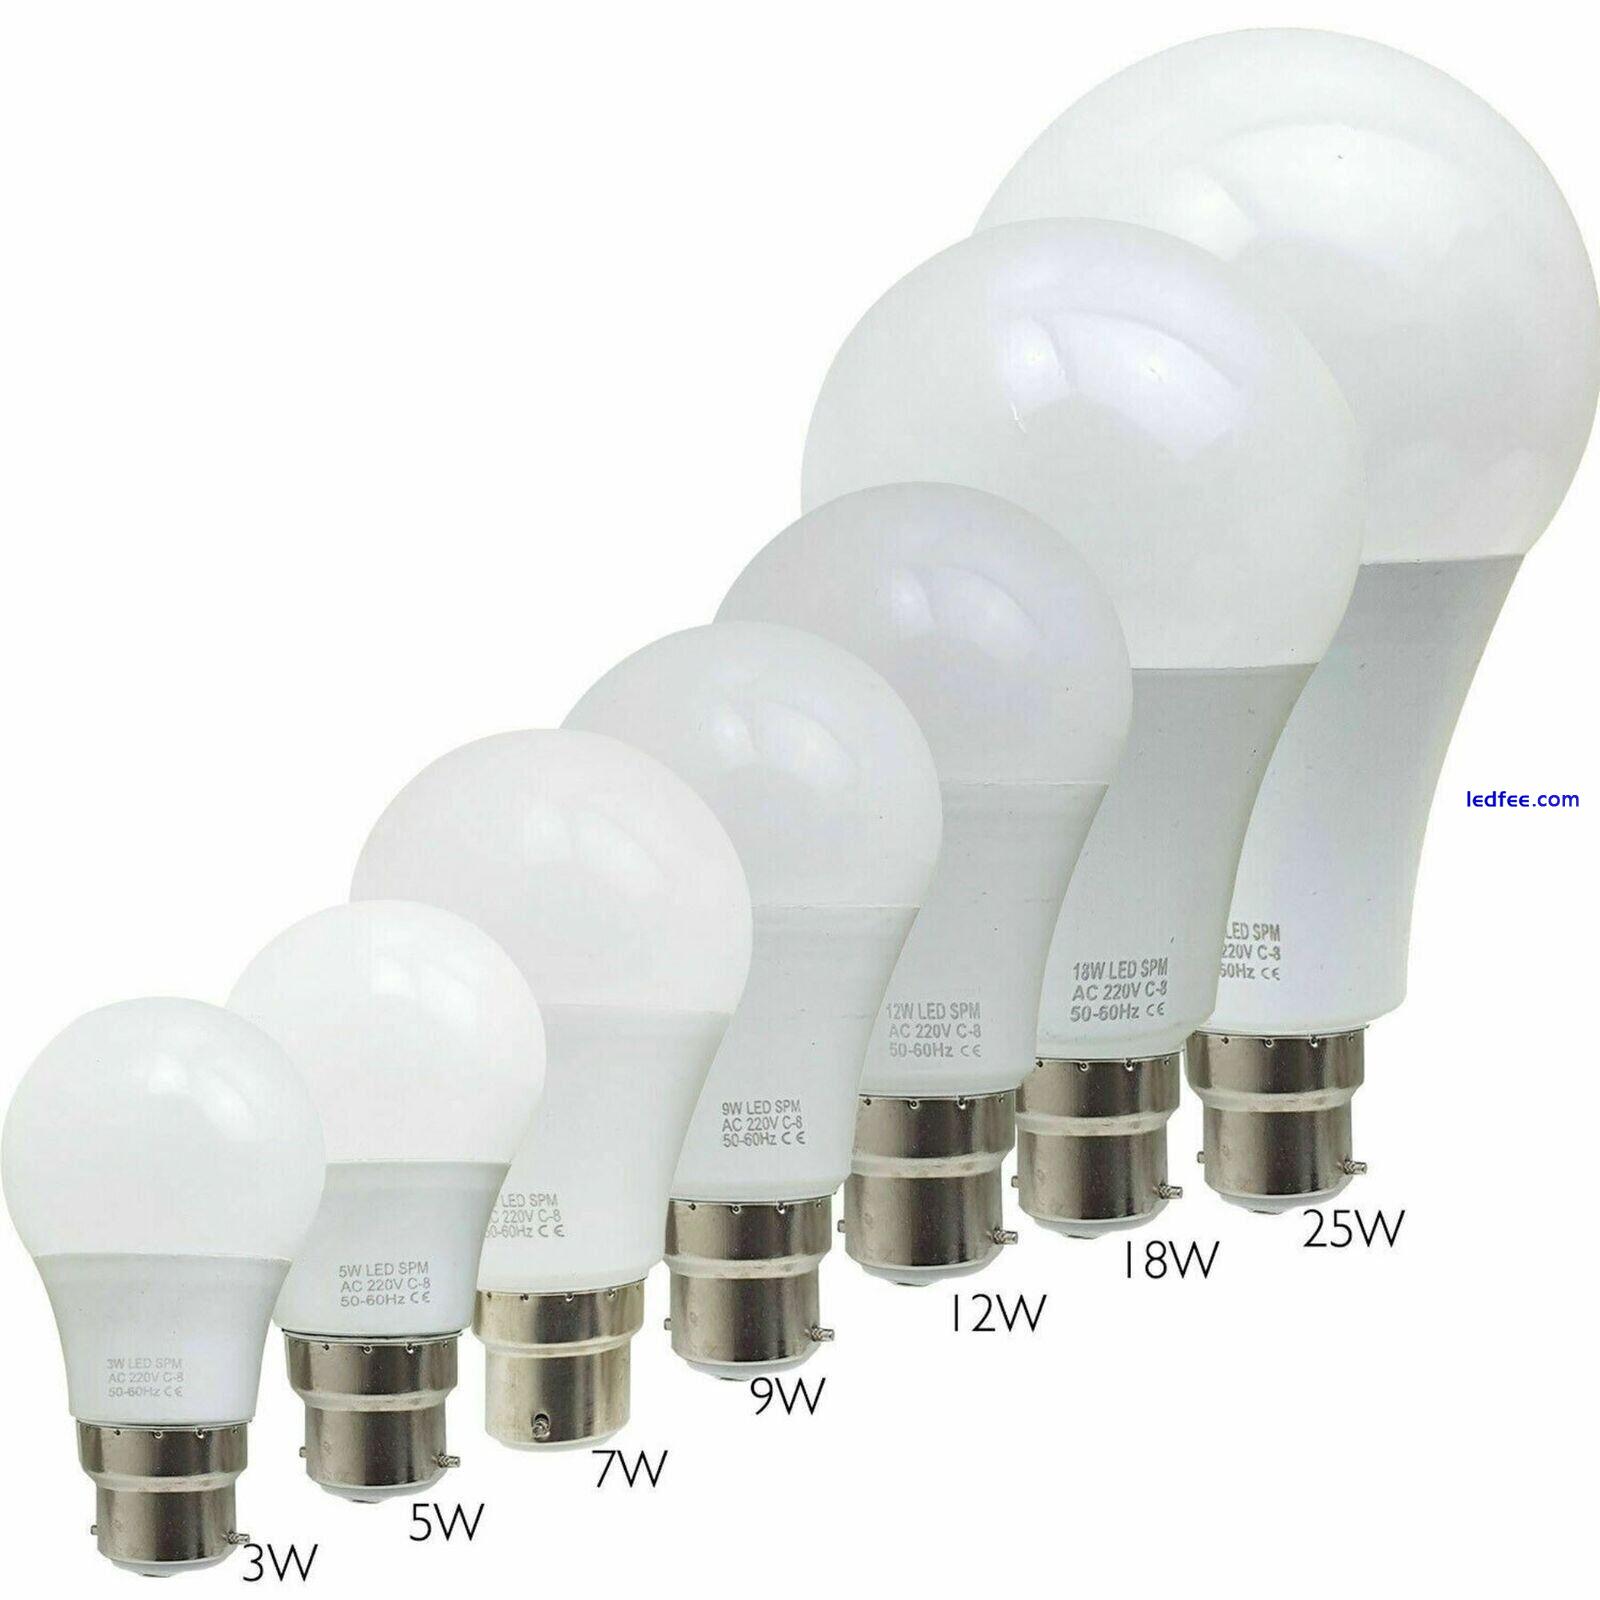 LED GLS LIGHT BULBS 3W-25w WARM/COOL WHITE BC/B22 ES/E27 Lamp Daylight 3 